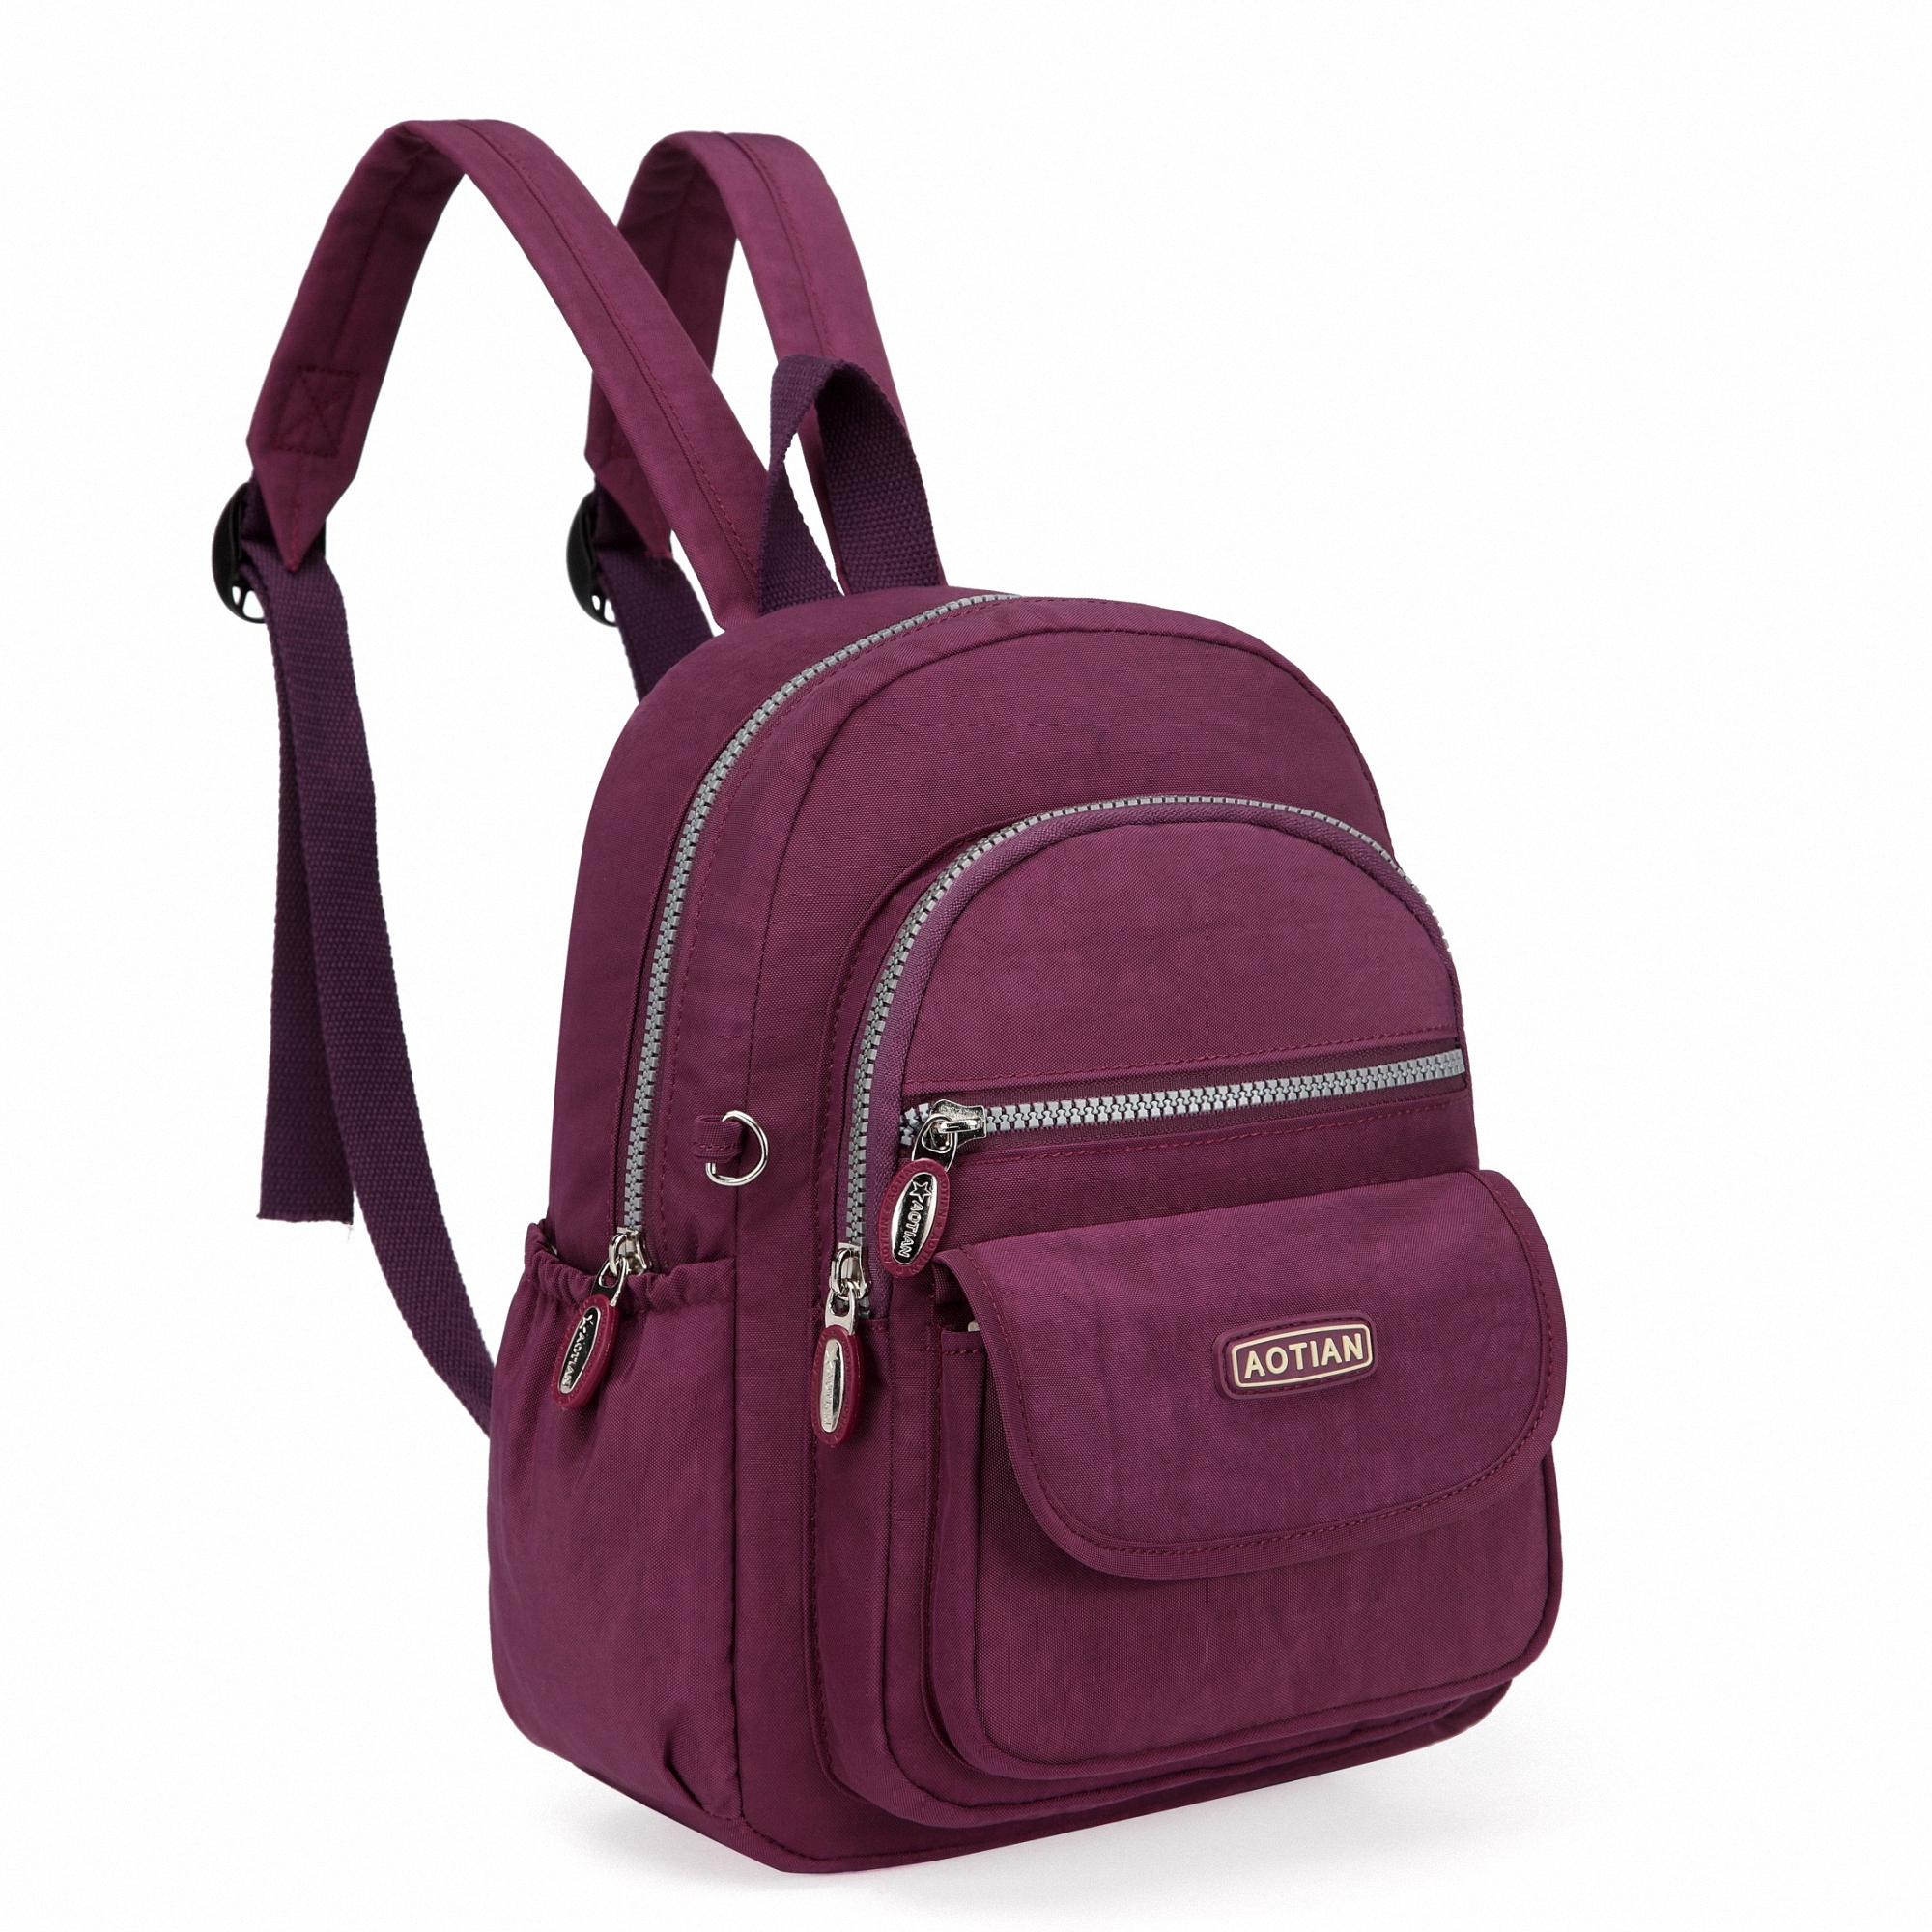 AOTIAN Mini Nylon Women Backpacks Casual Lightweight Small Daypack for Girls Purple - image 2 of 7